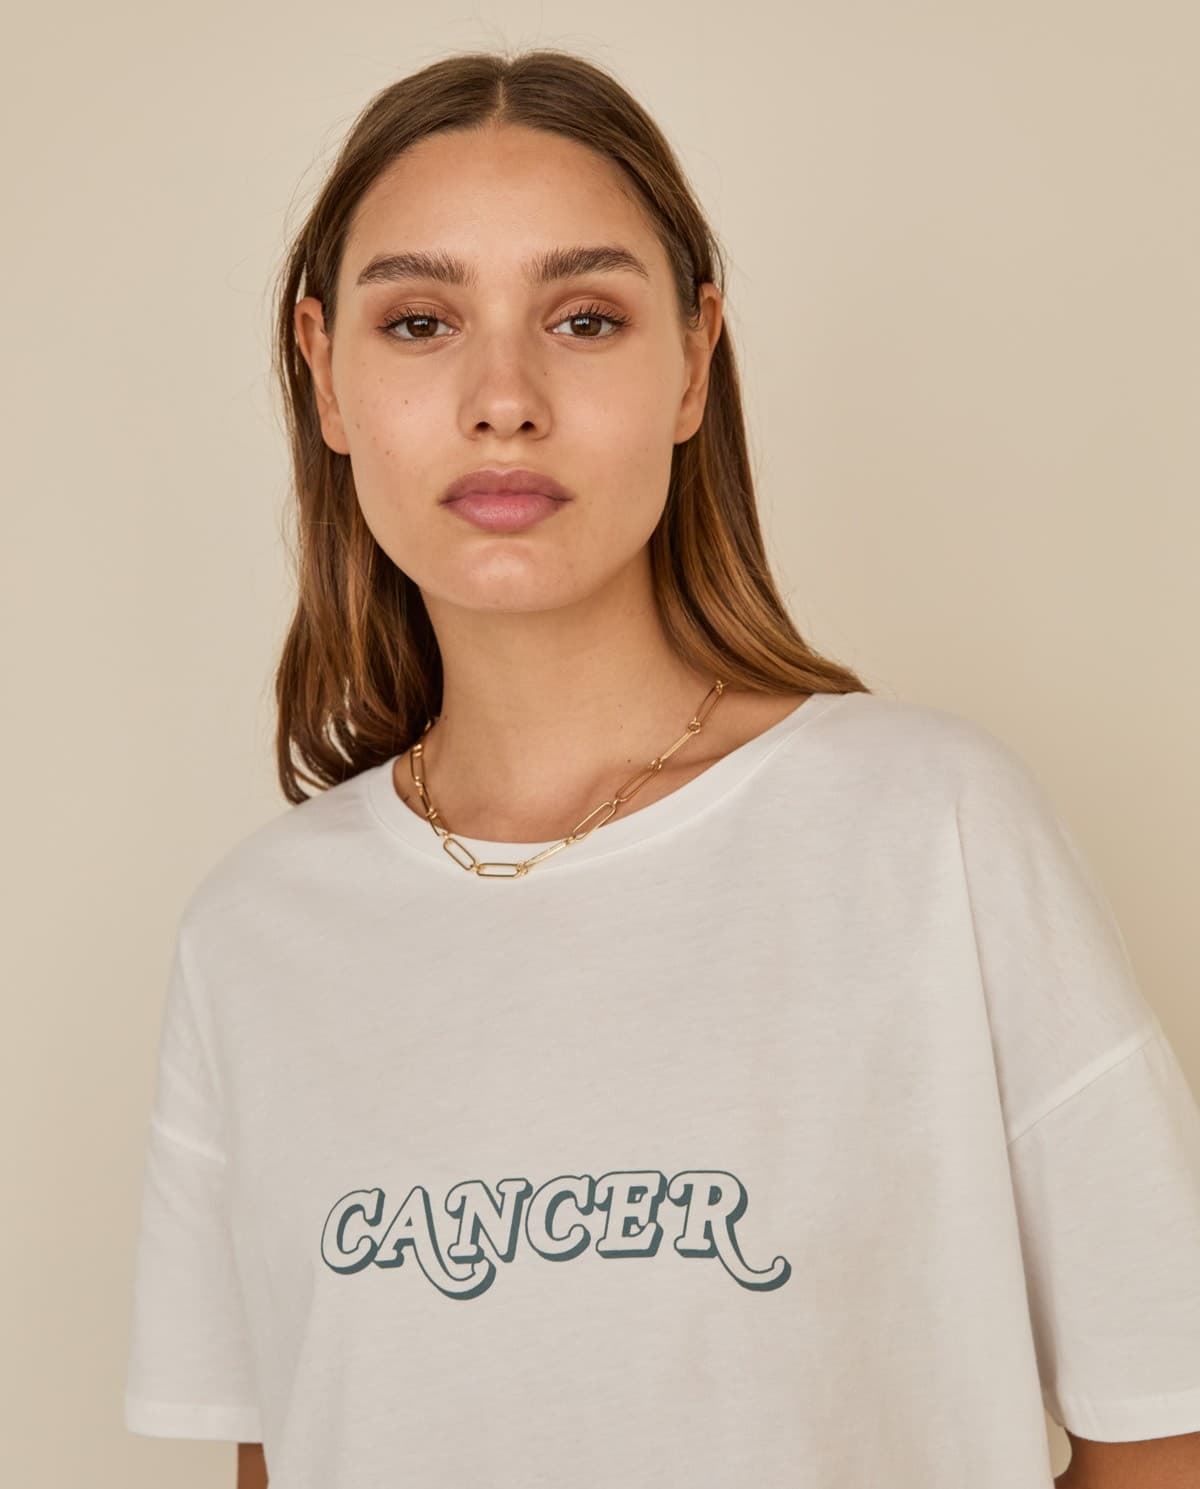 Camiseta Yerse cancer - Imagen 1